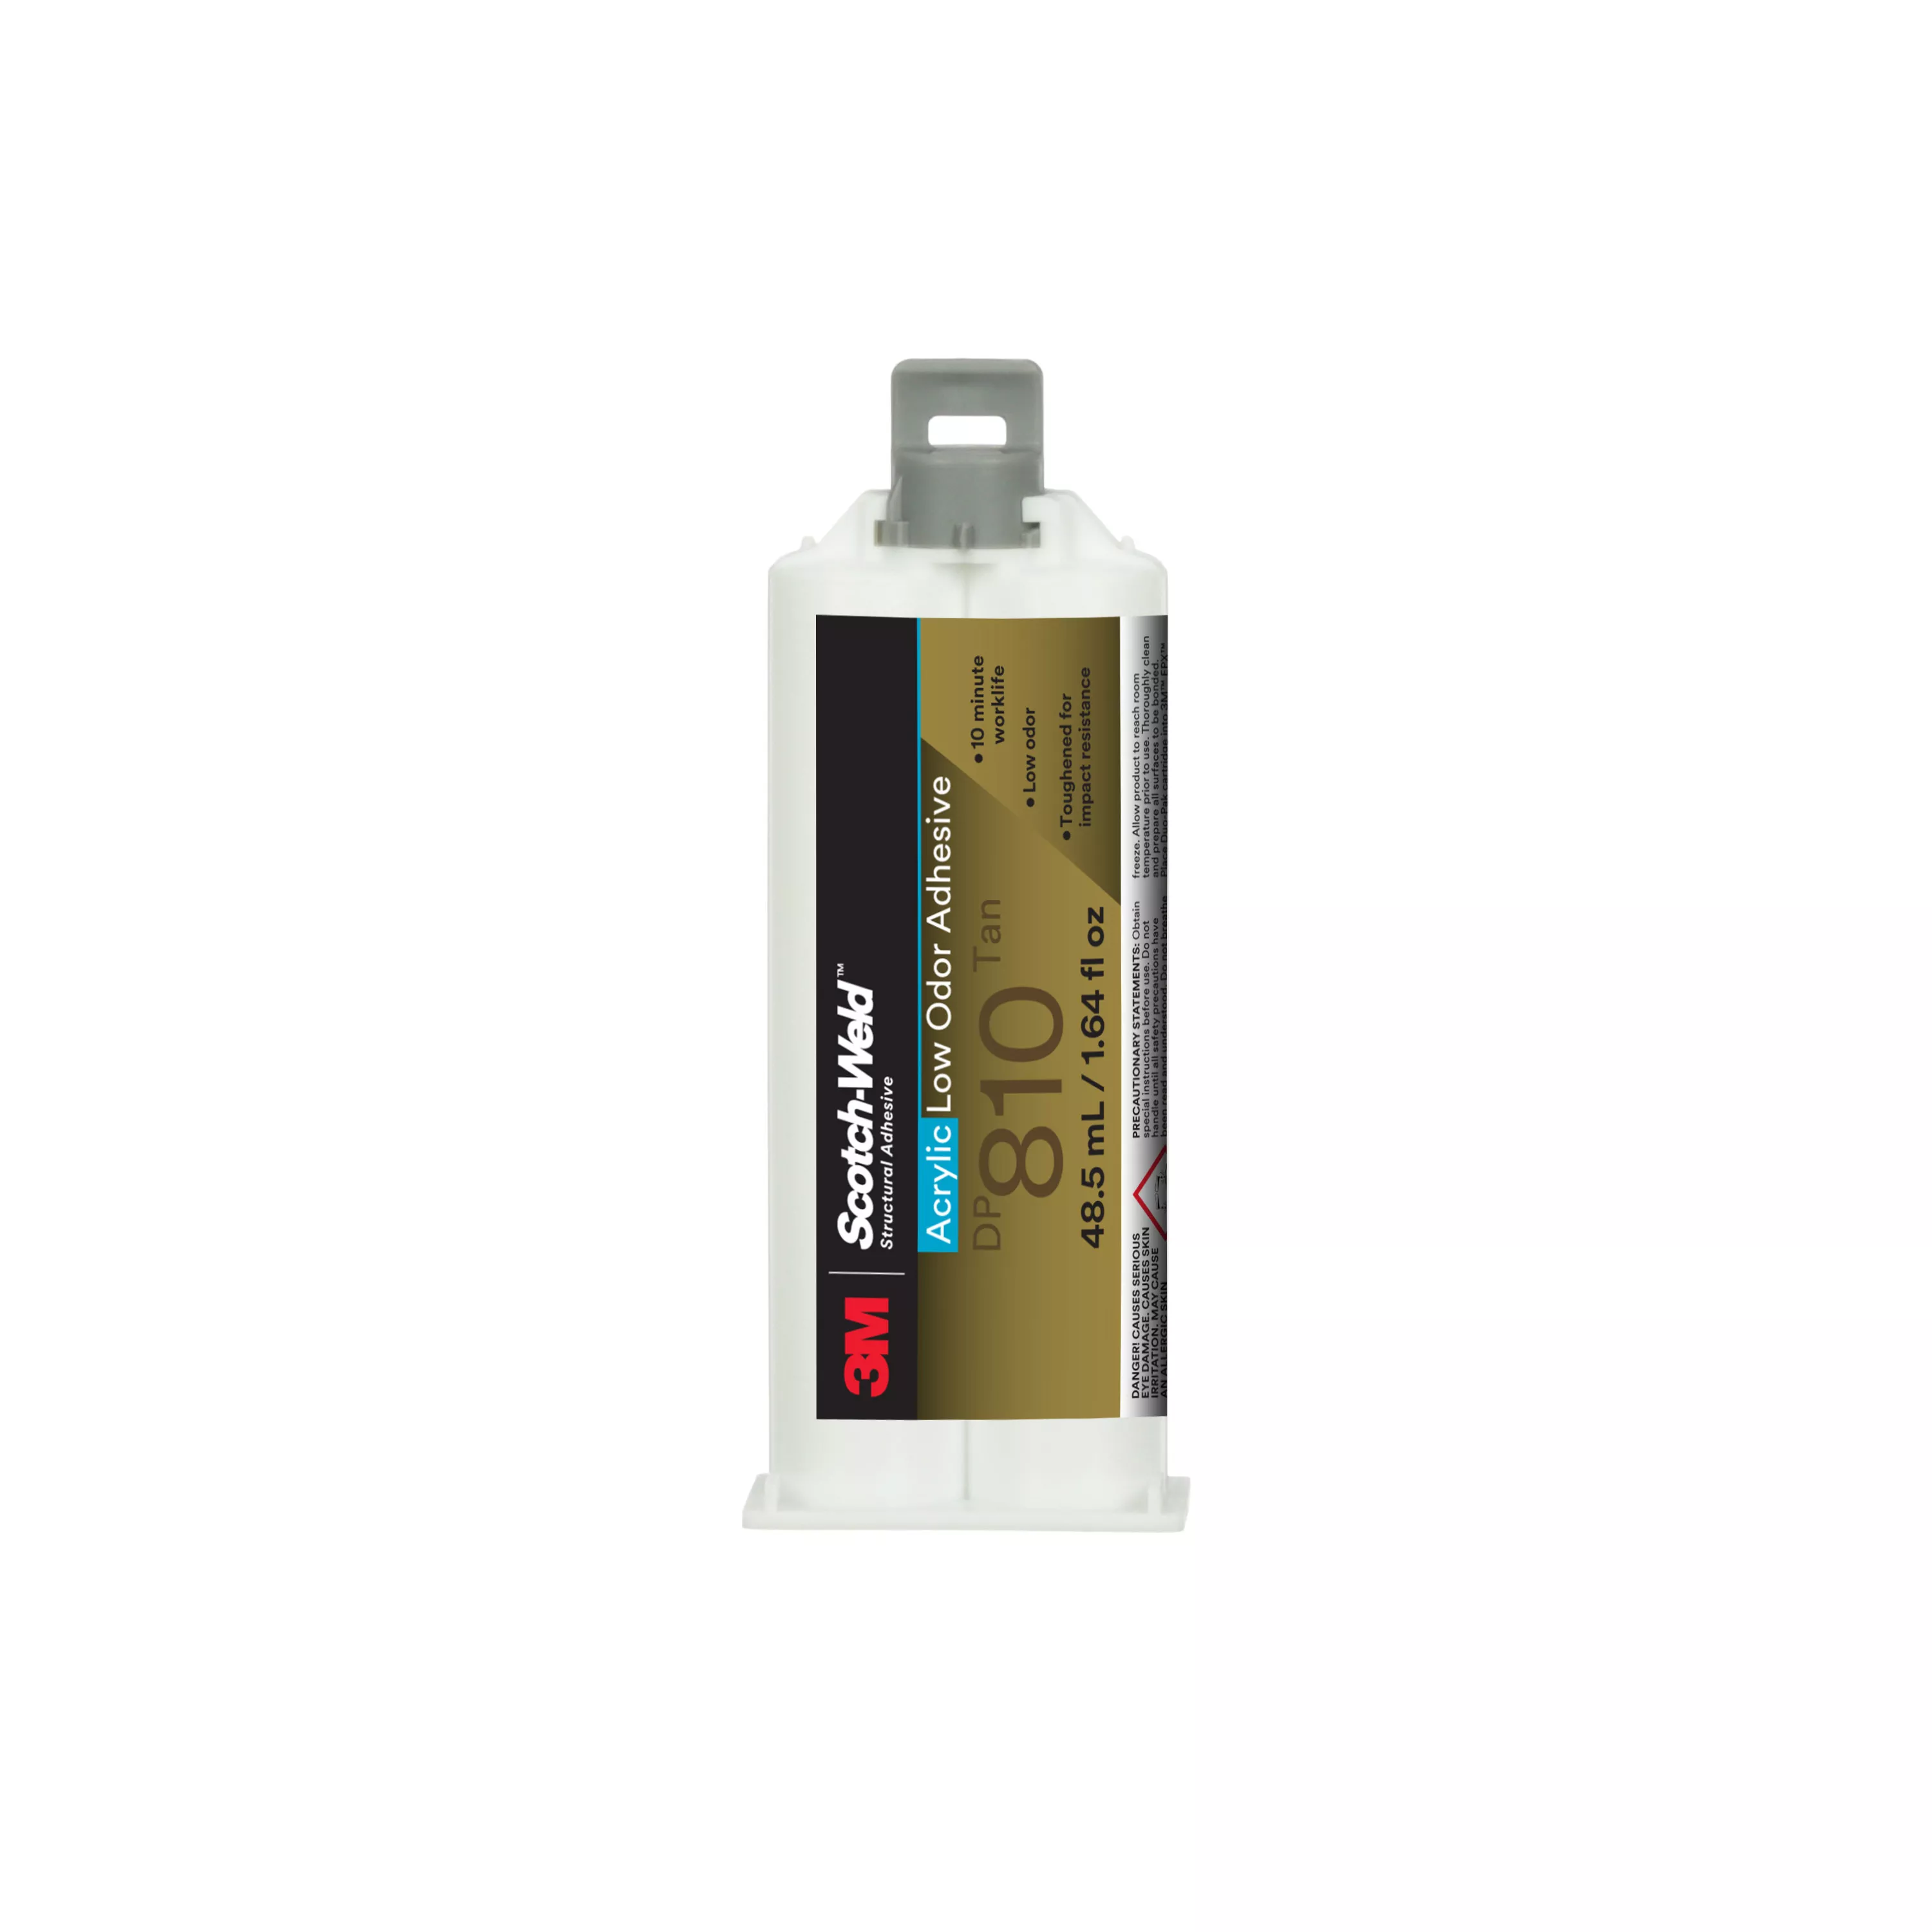 3M™ Scotch-Weld™ Low Odor Acrylic Adhesive DP810, Tan, 48.5 mL Duo-Pak,
12/Case